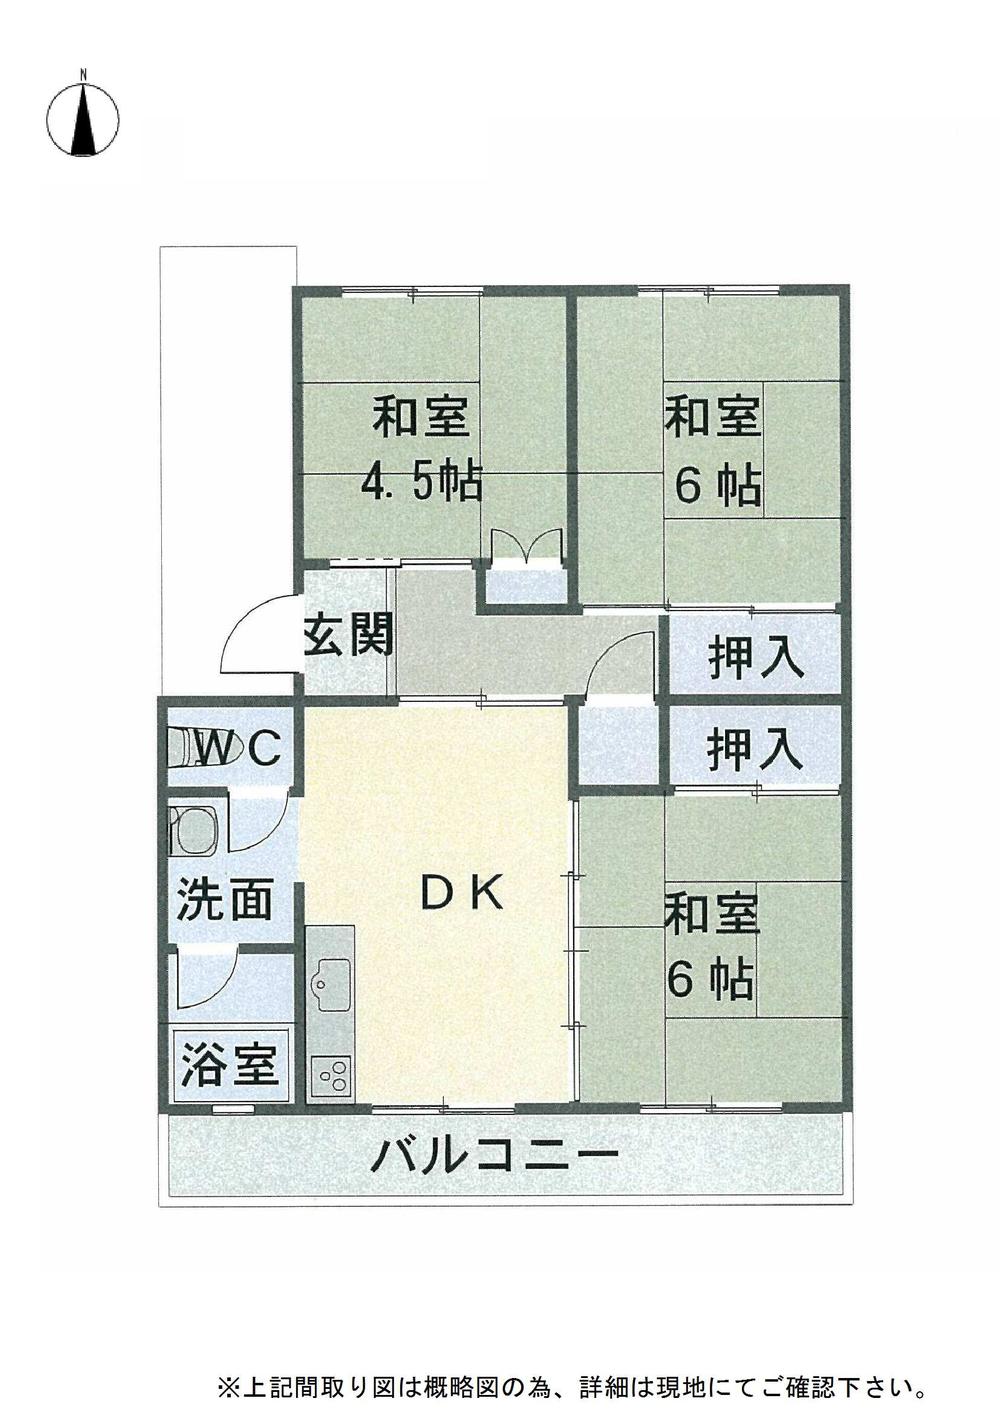 Floor plan. 3DK, Price 5.4 million yen, Occupied area 53.83 sq m , Balcony area 8.19 sq m